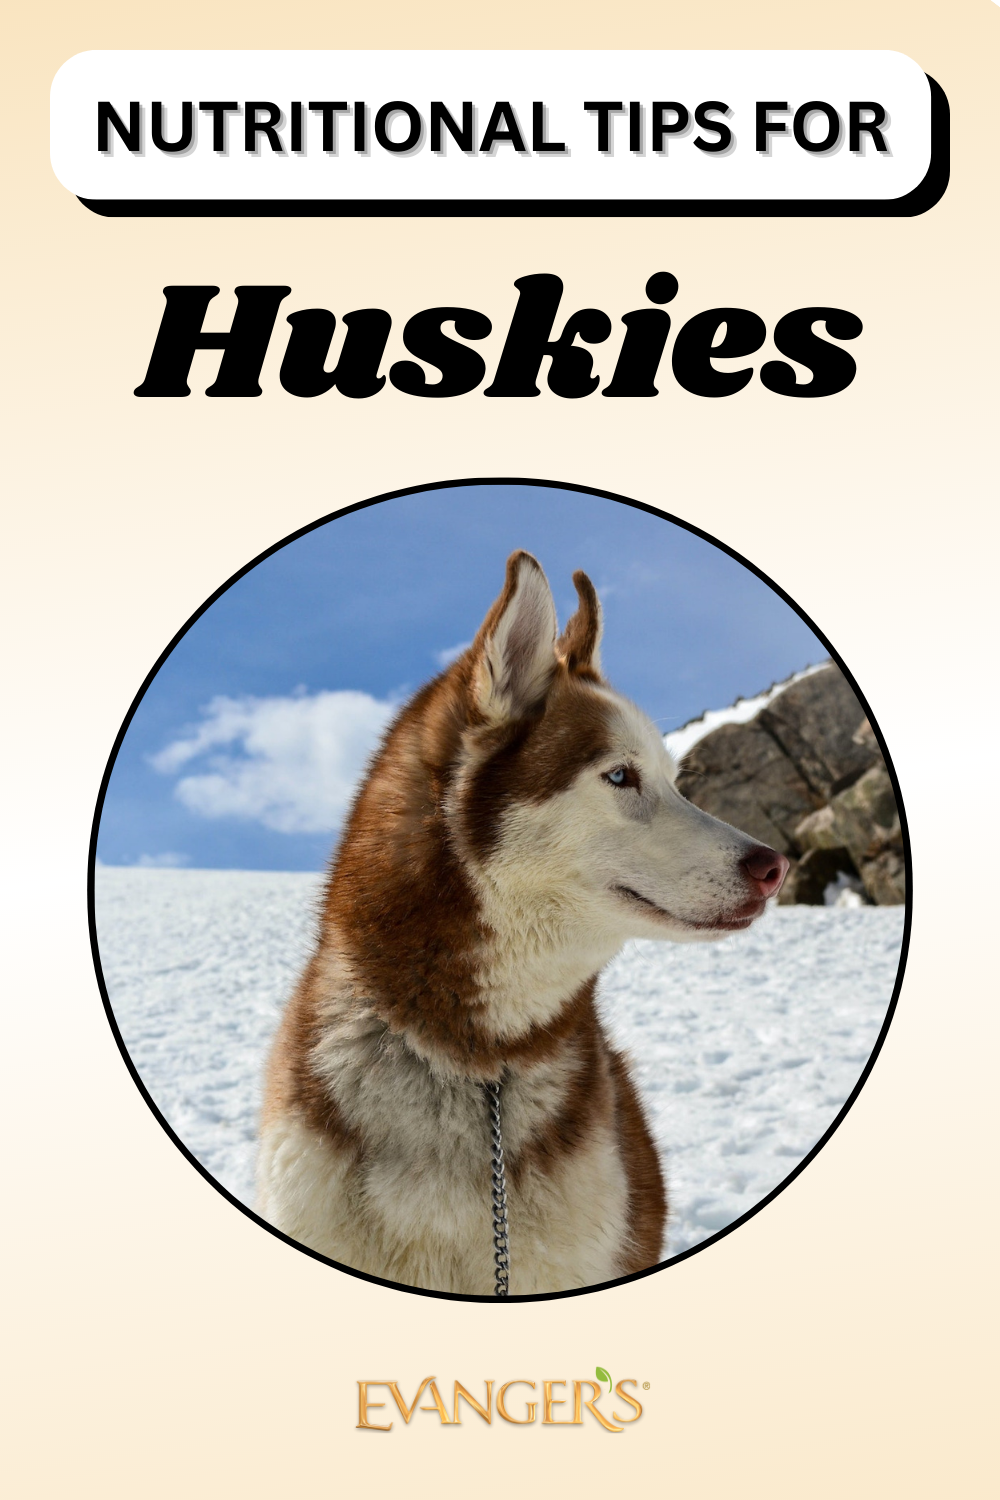 Nutritional Tips for Huskies